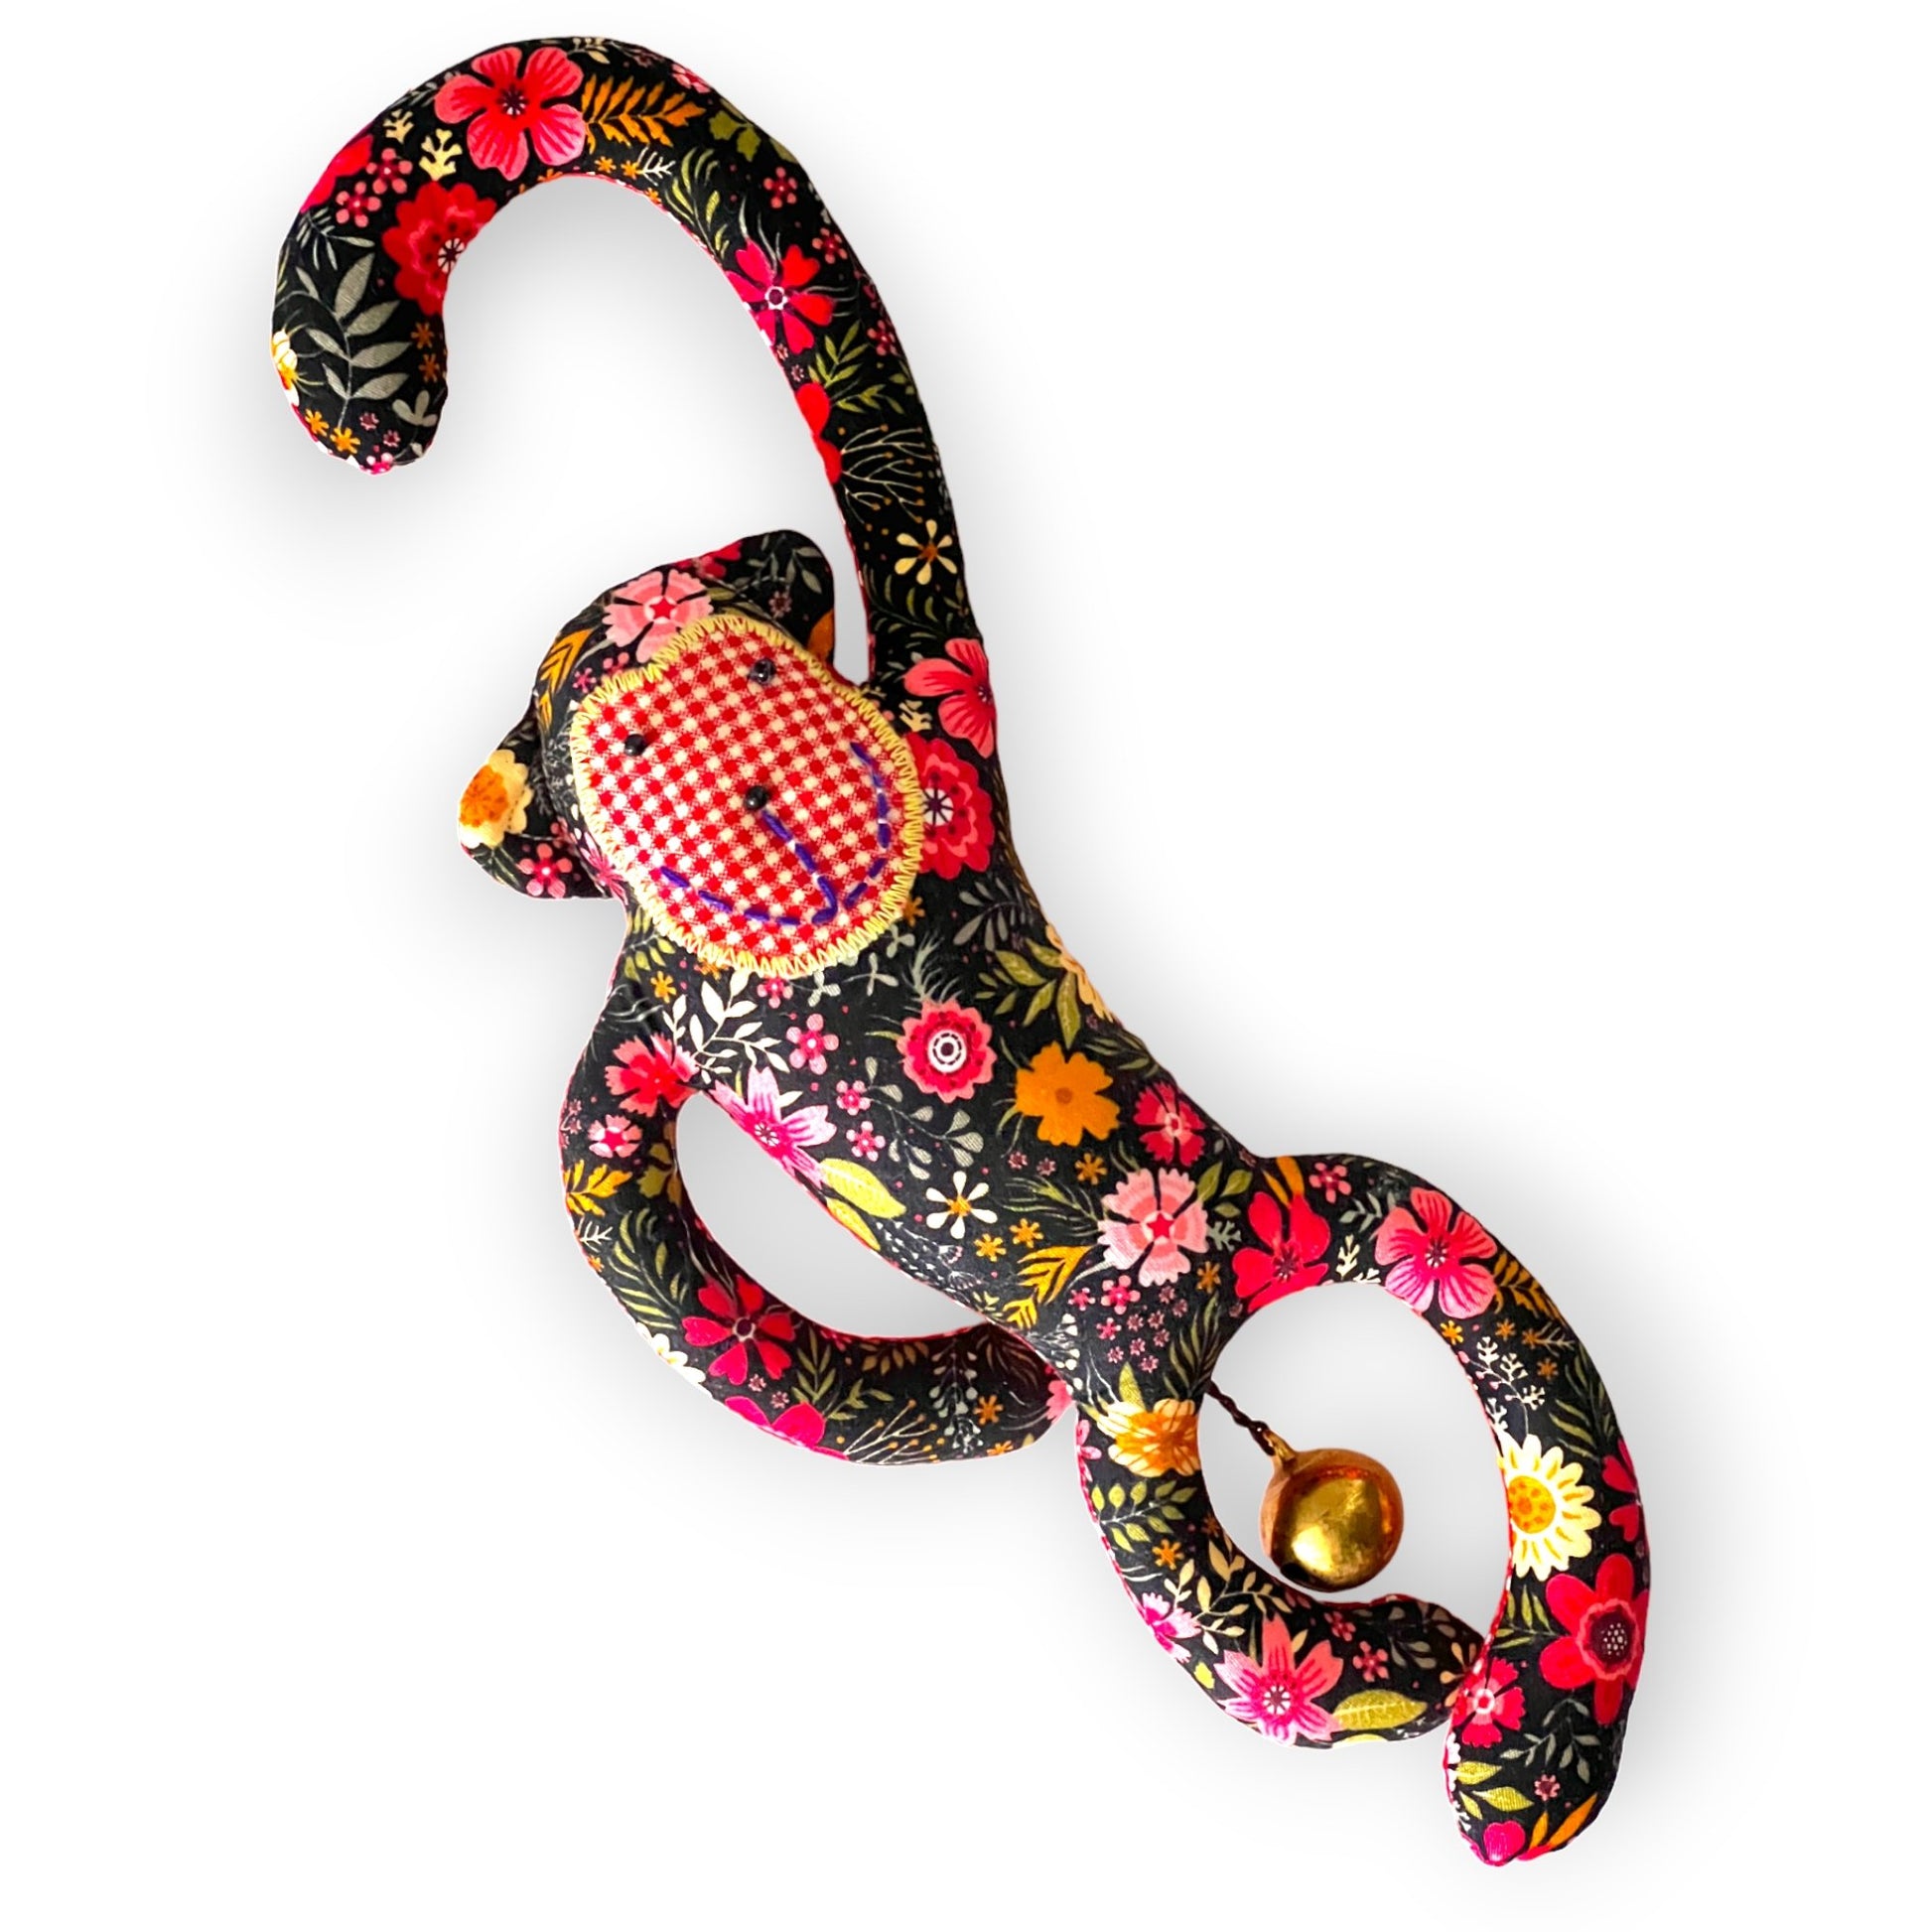 Cheeky monkey fabric door jewelry with bell - Sundara Joon